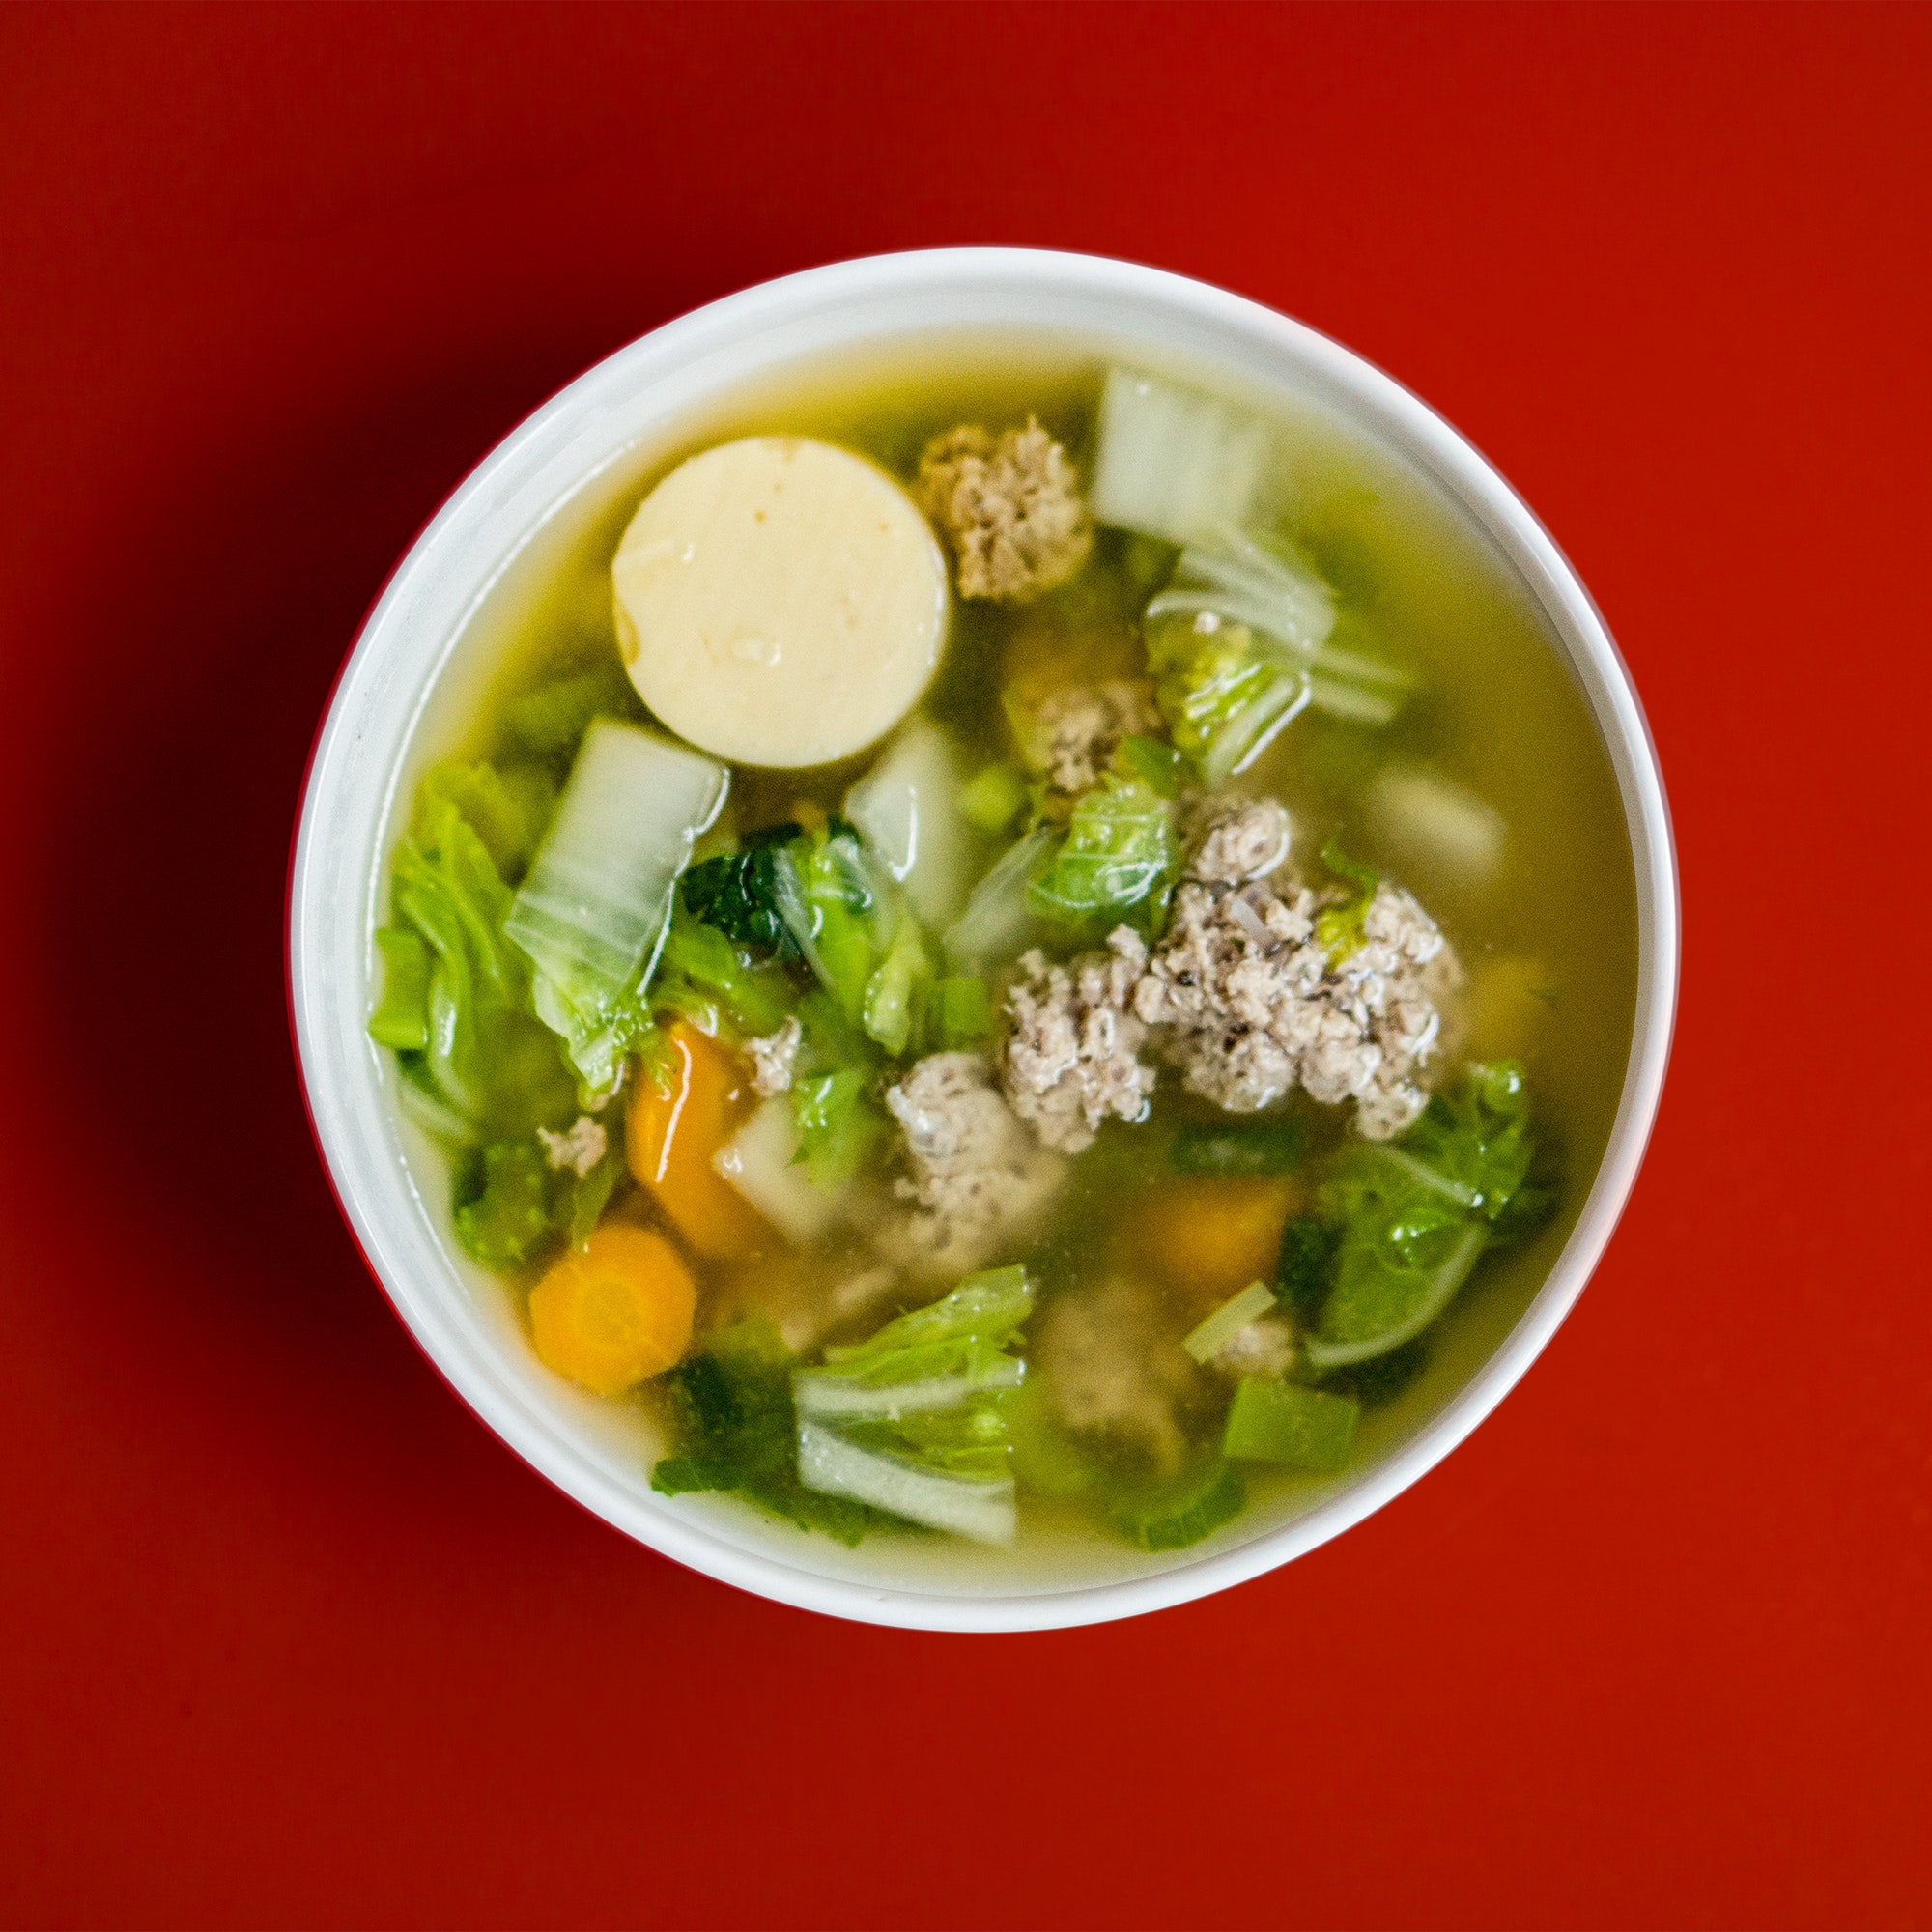 Vegan Lentil Soup Recipe with Kale and Carrots